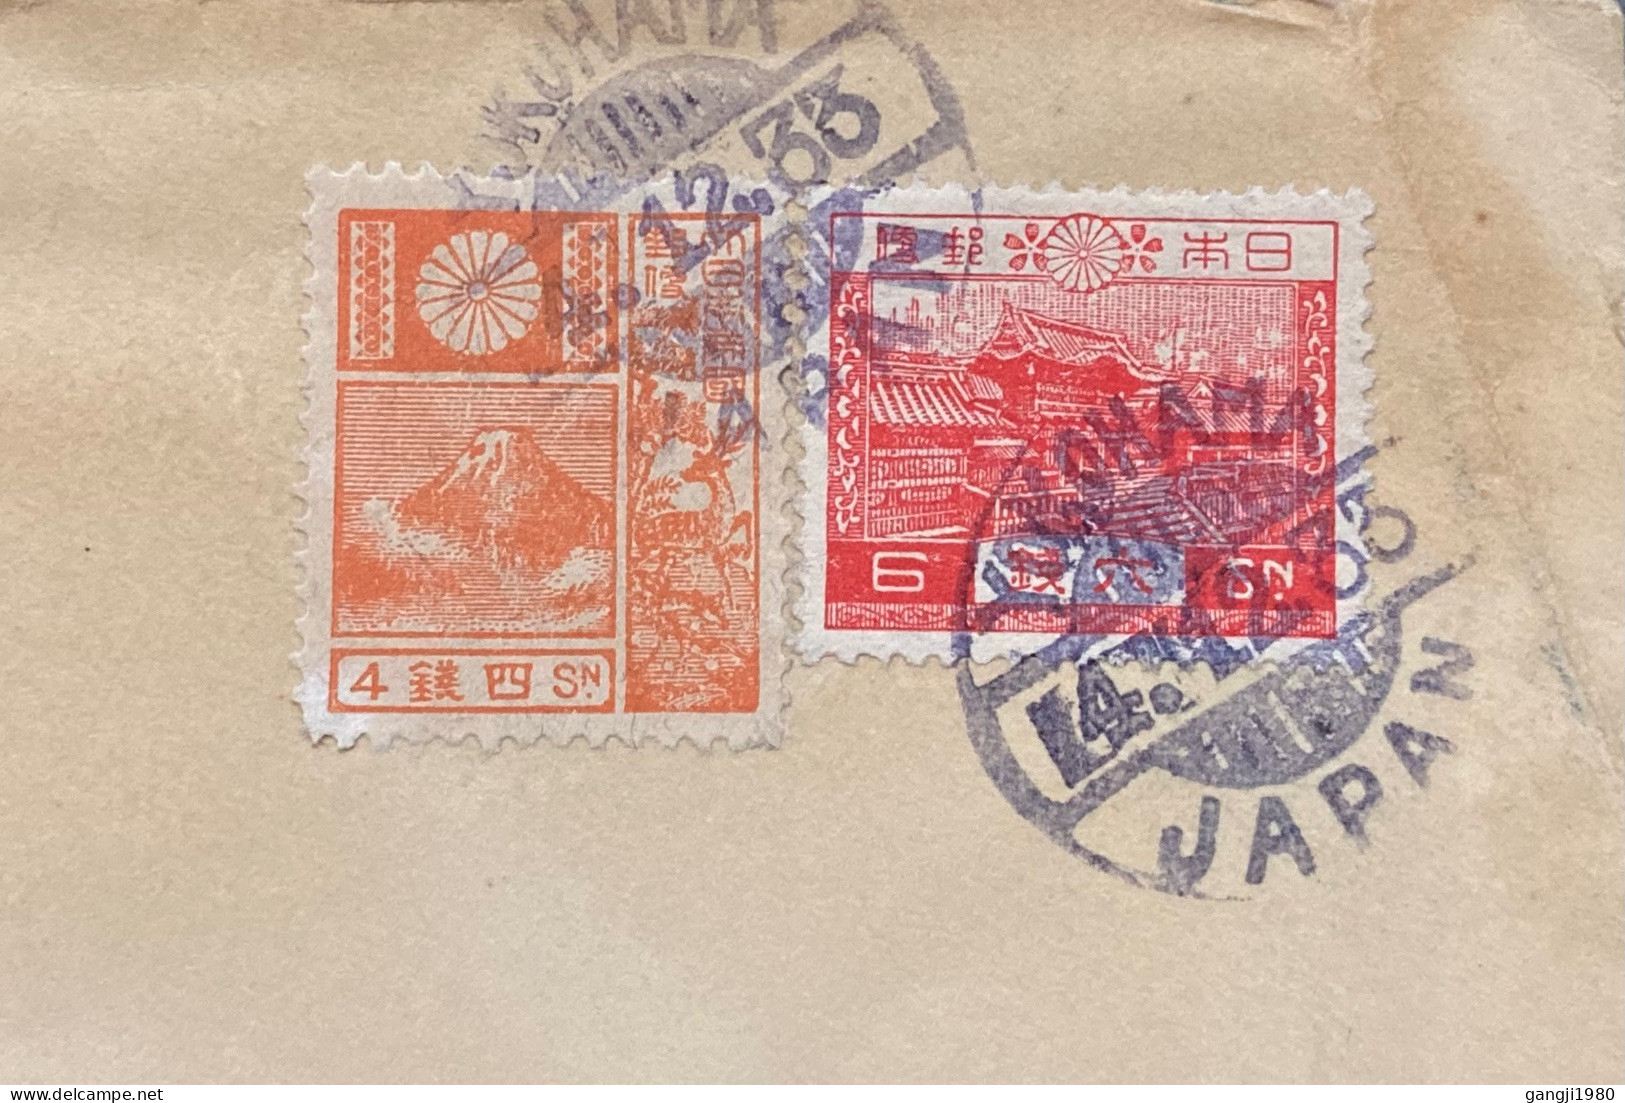 JAPAN 1933, COVER USED TO USA, 1922 MT, FUJI. & DEER, 1926 TIMER GATE STAMP, YOKOHAMA CITY CANCEL. - Covers & Documents